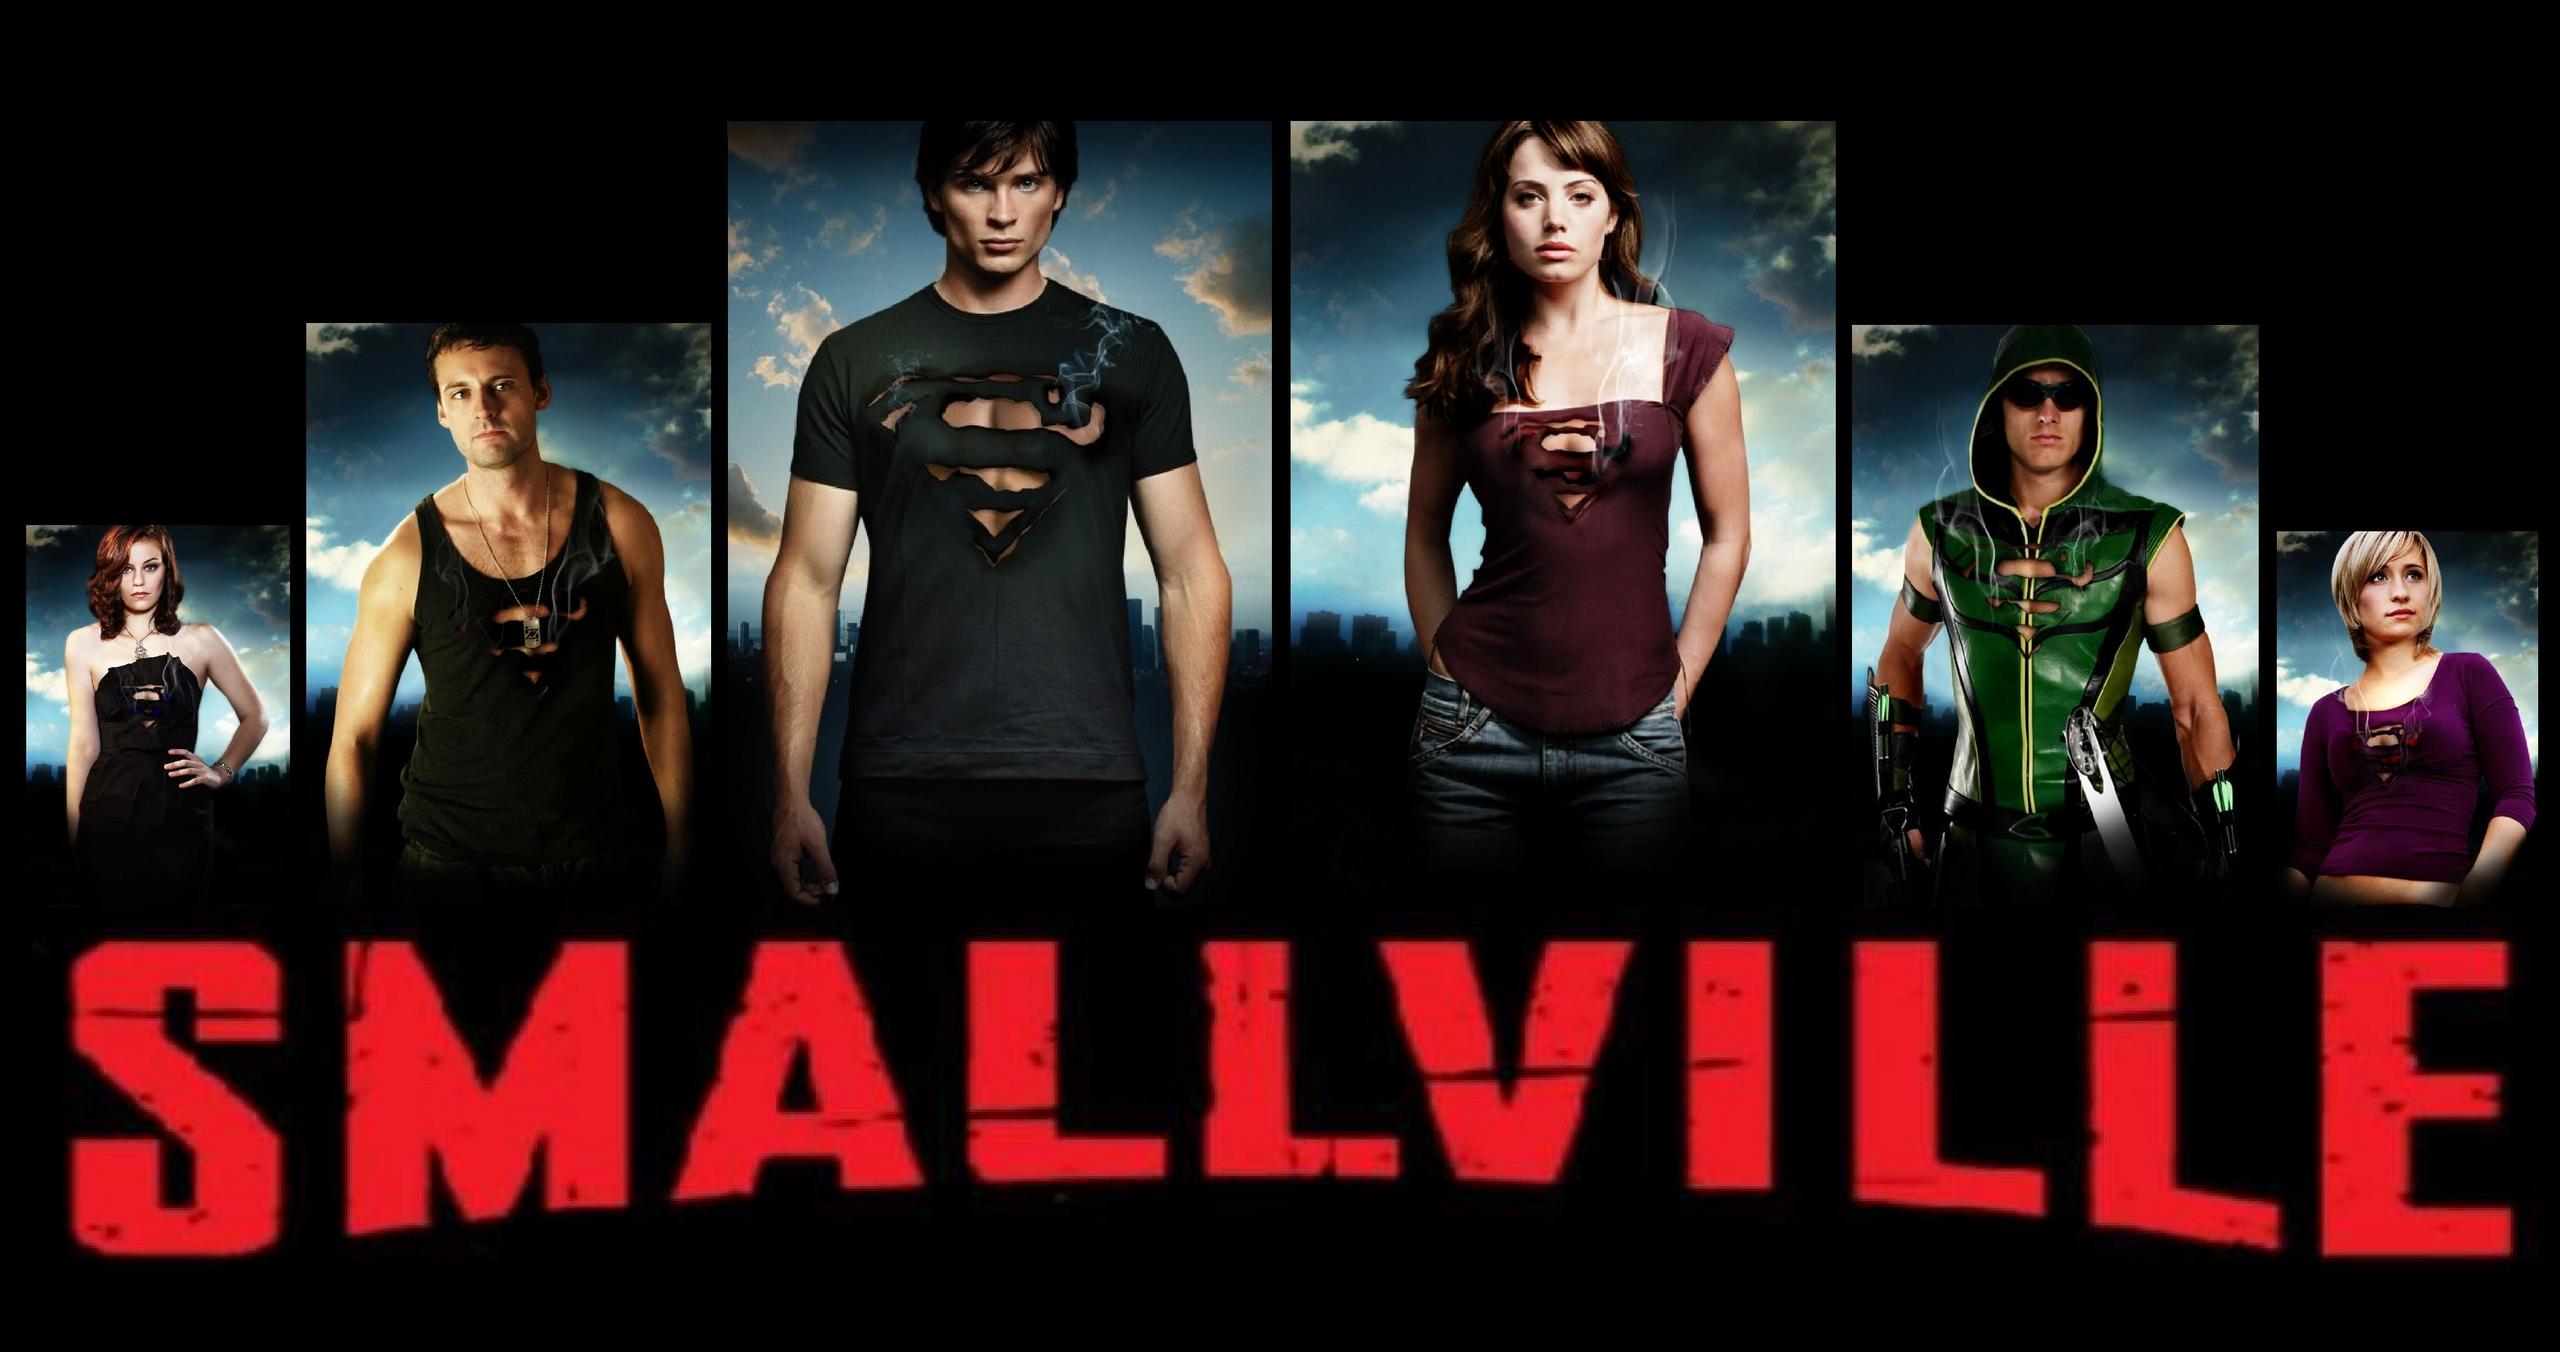 Smallville Image Widscreen HD Wallpaper And